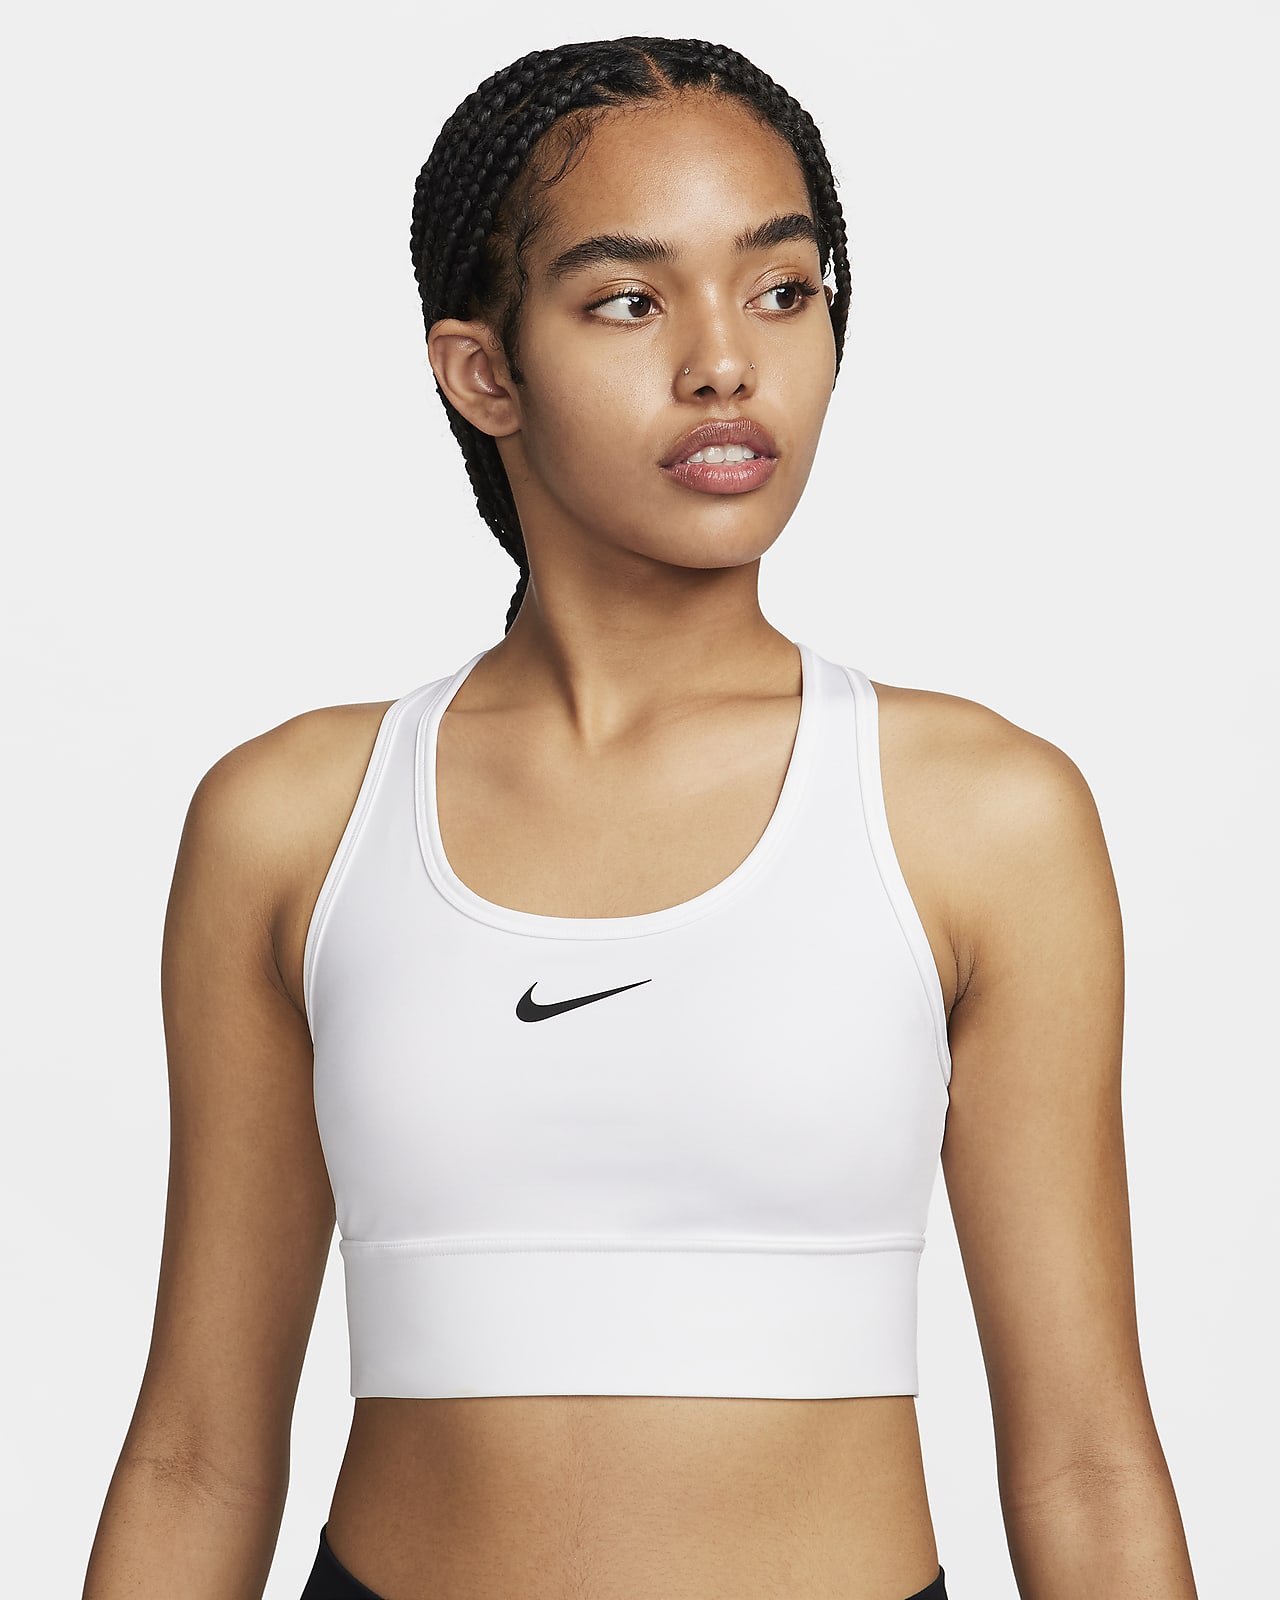 Women's Nike pro padded sports bra Medium cross back White and black